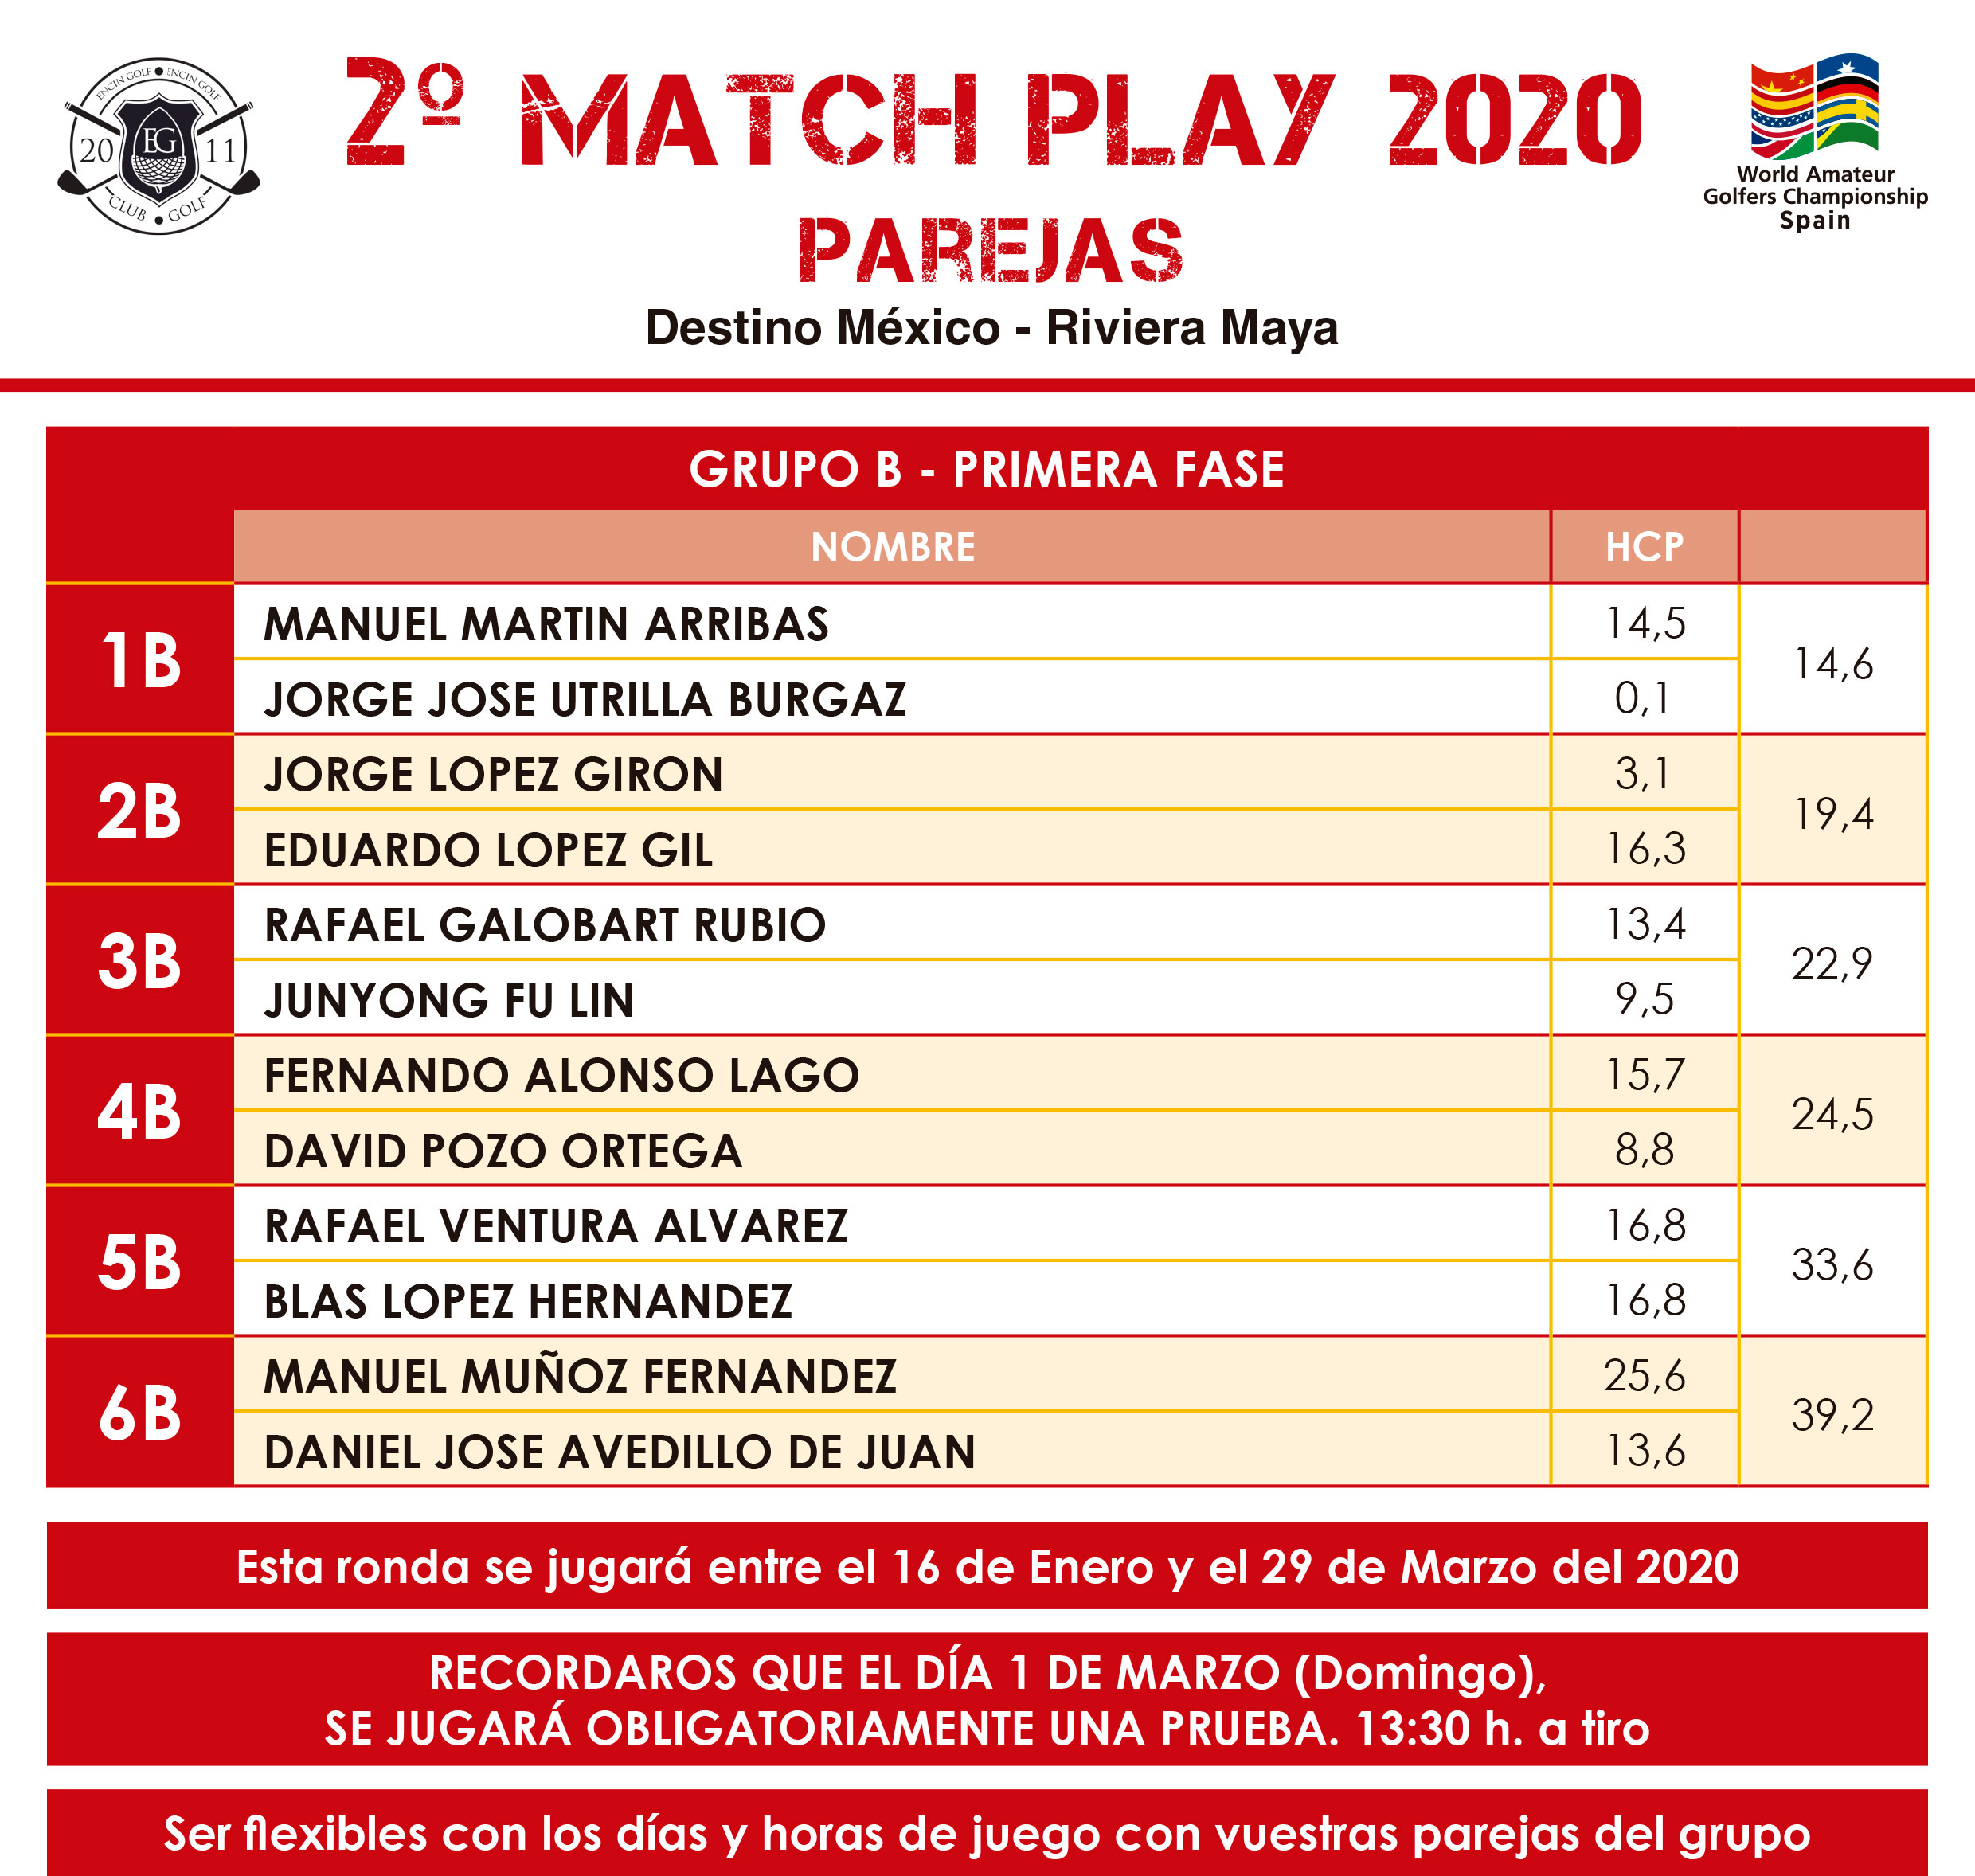 WAGC SPAIN - MATCH PLAY 2020 PAREJAS - 1ª FASE - GRUPO B